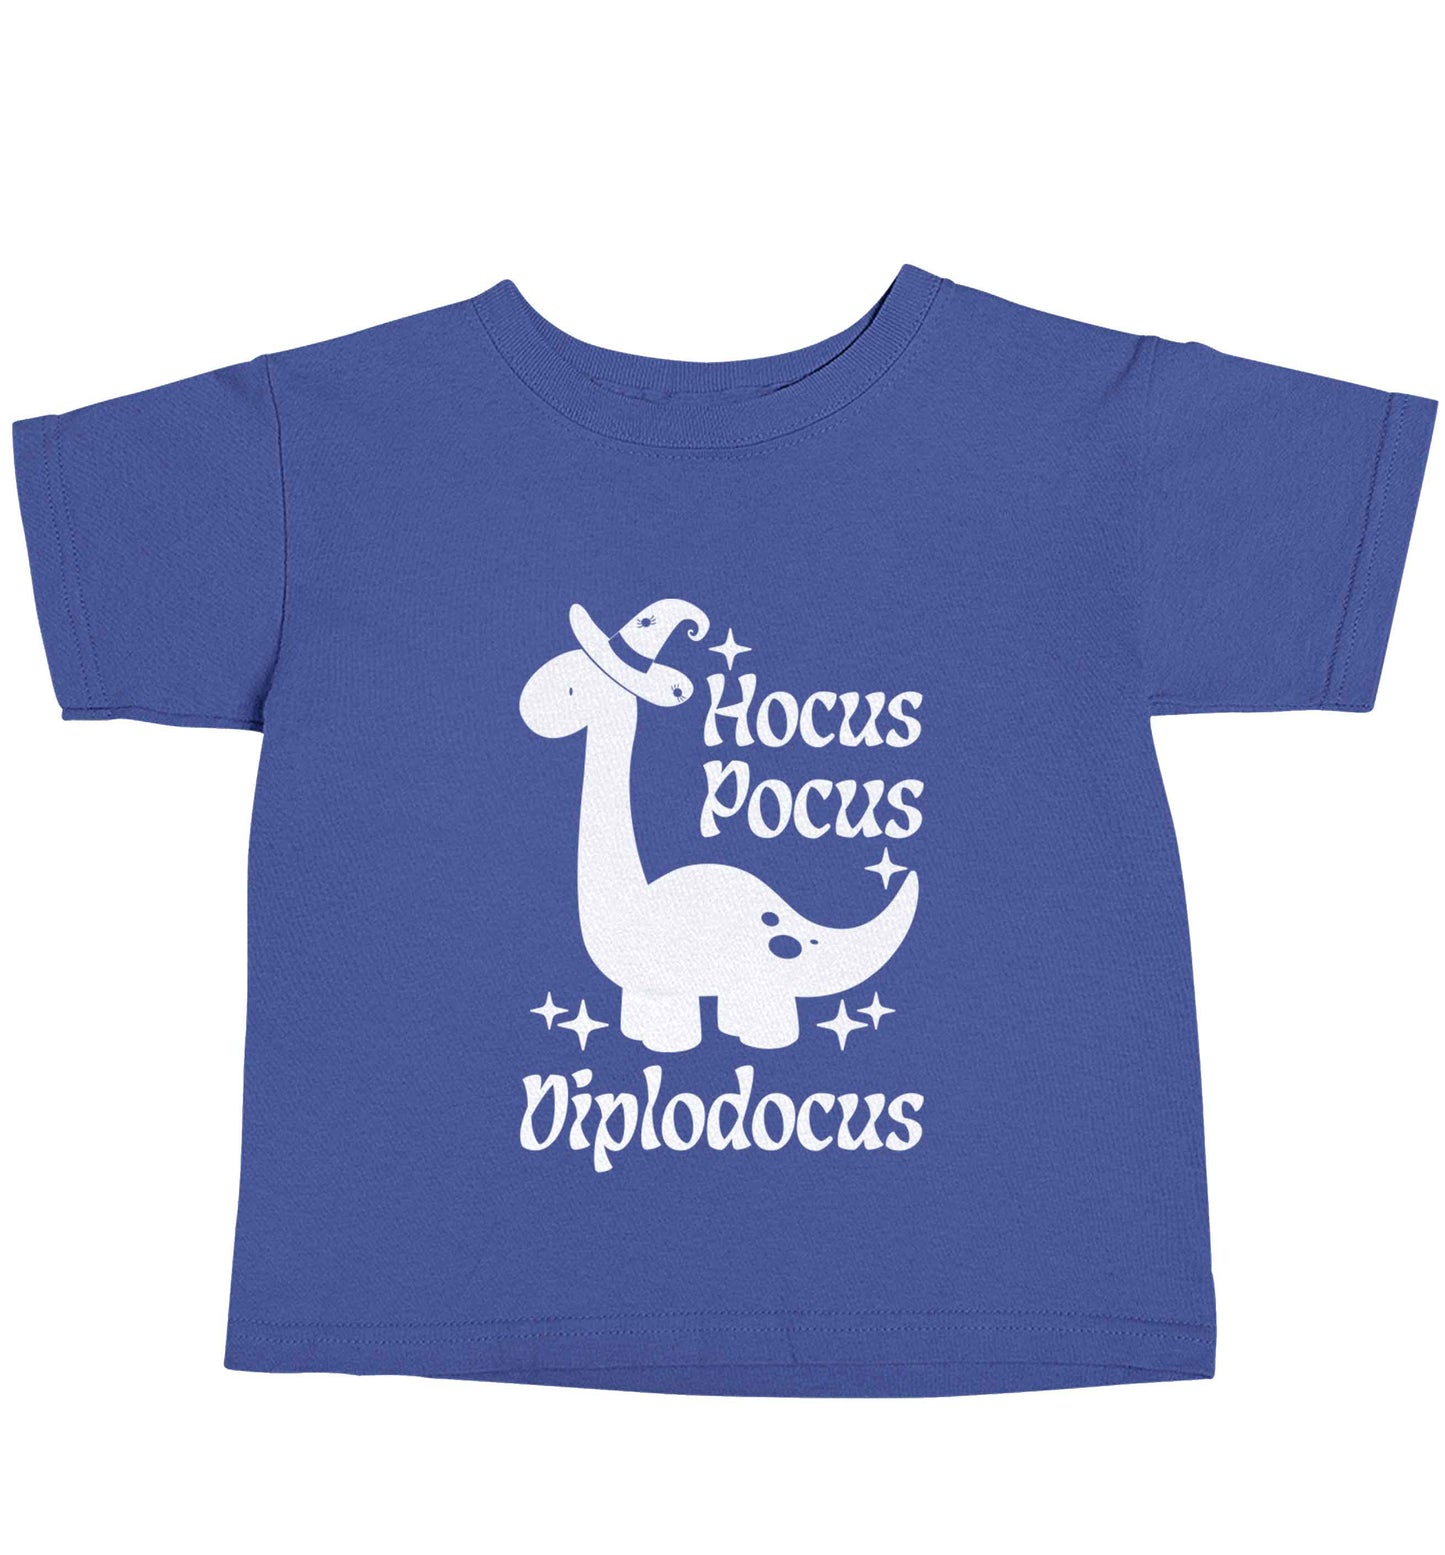 Hocus pocus diplodocus Kit blue baby toddler Tshirt 2 Years